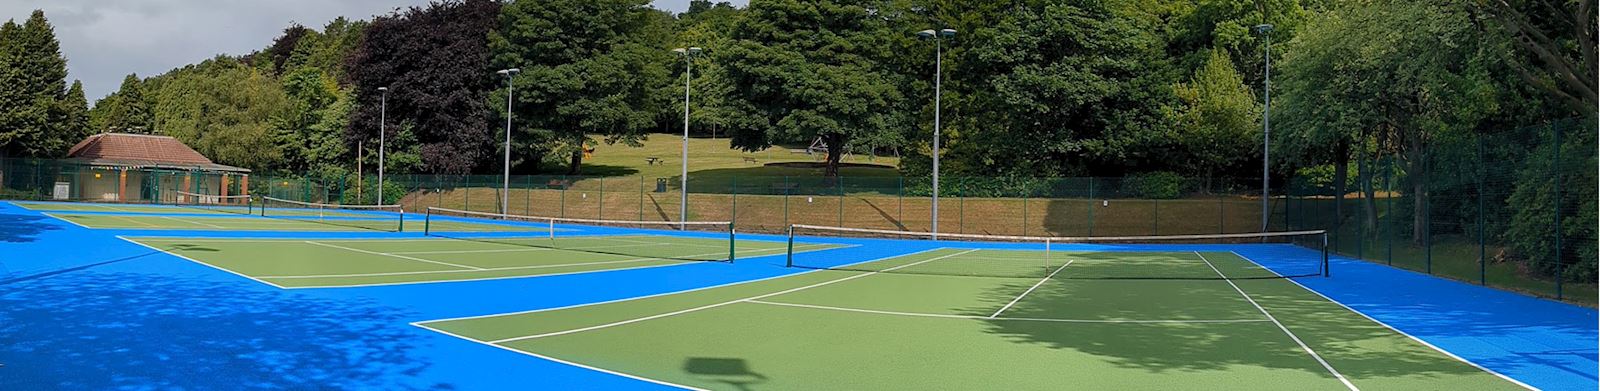 Kirkton Park Community Tennis Courts